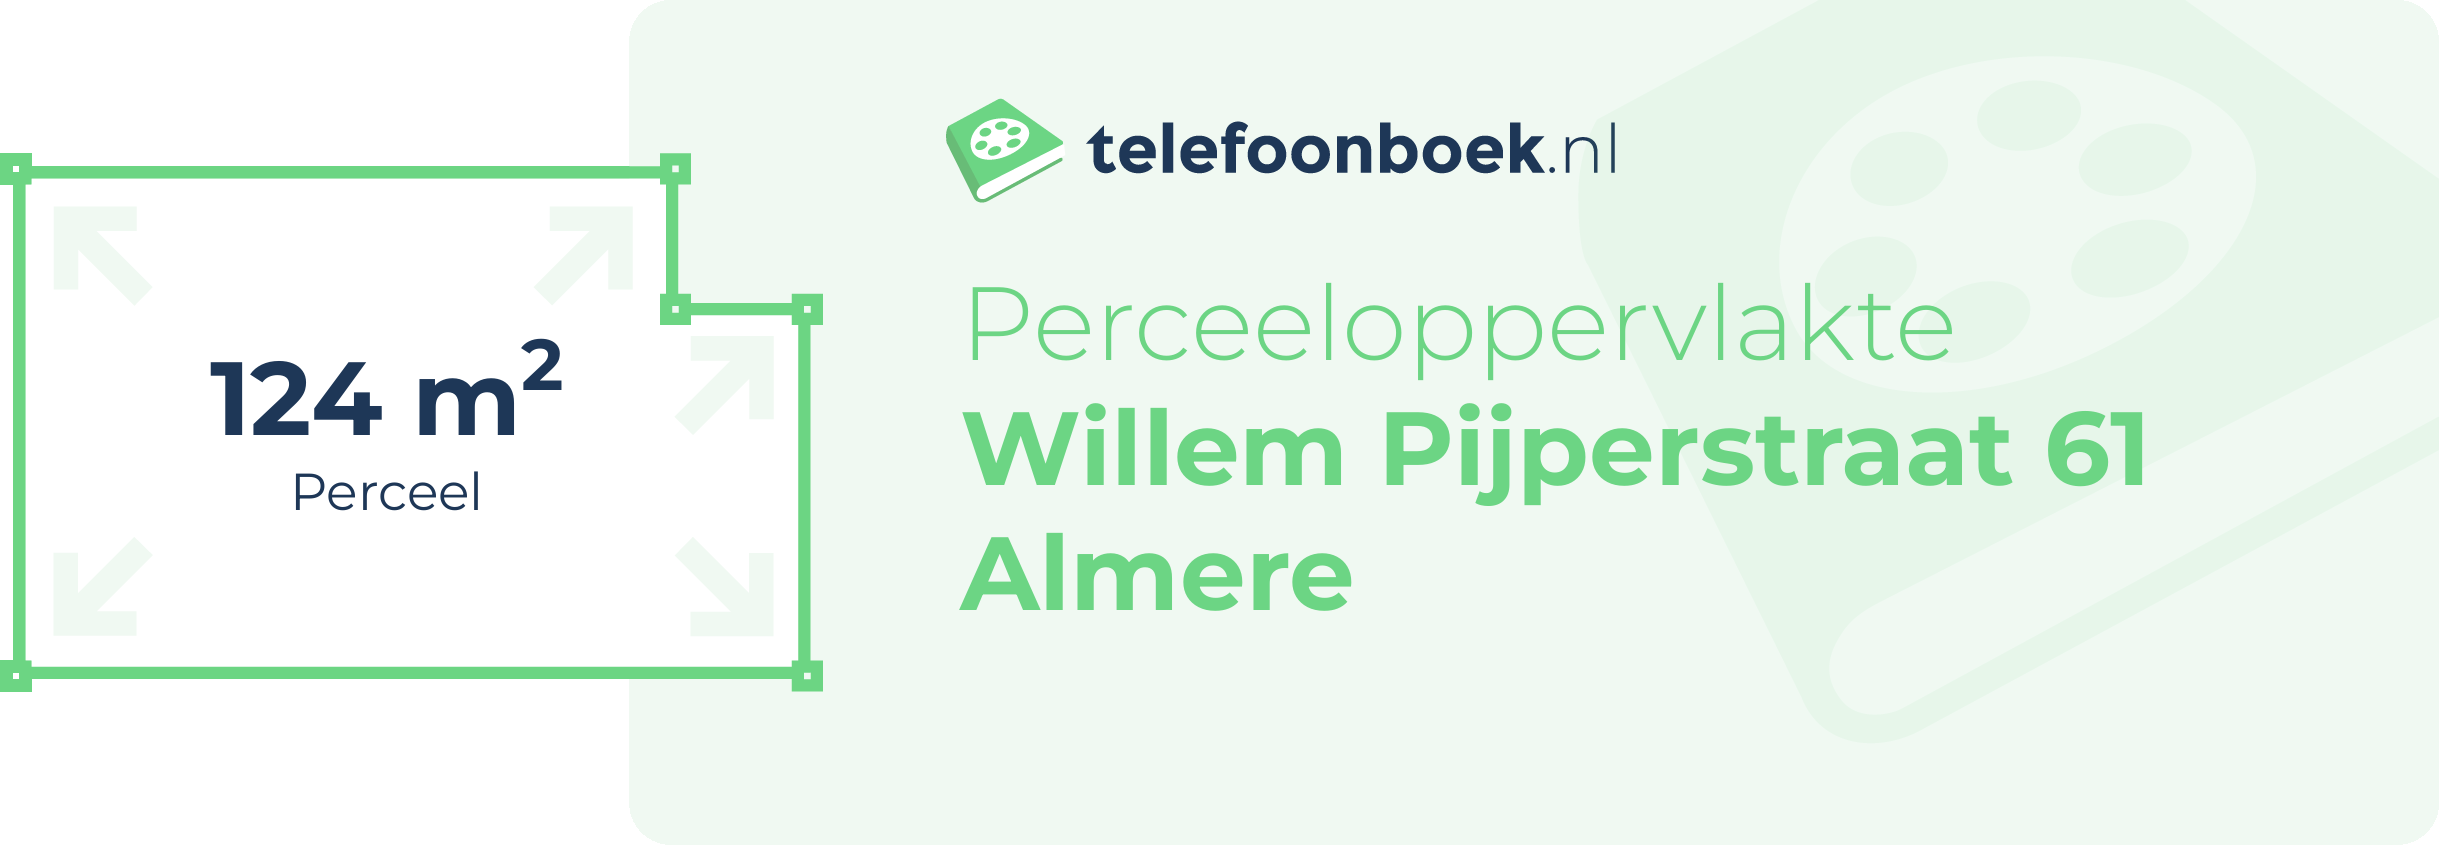 Perceeloppervlakte Willem Pijperstraat 61 Almere